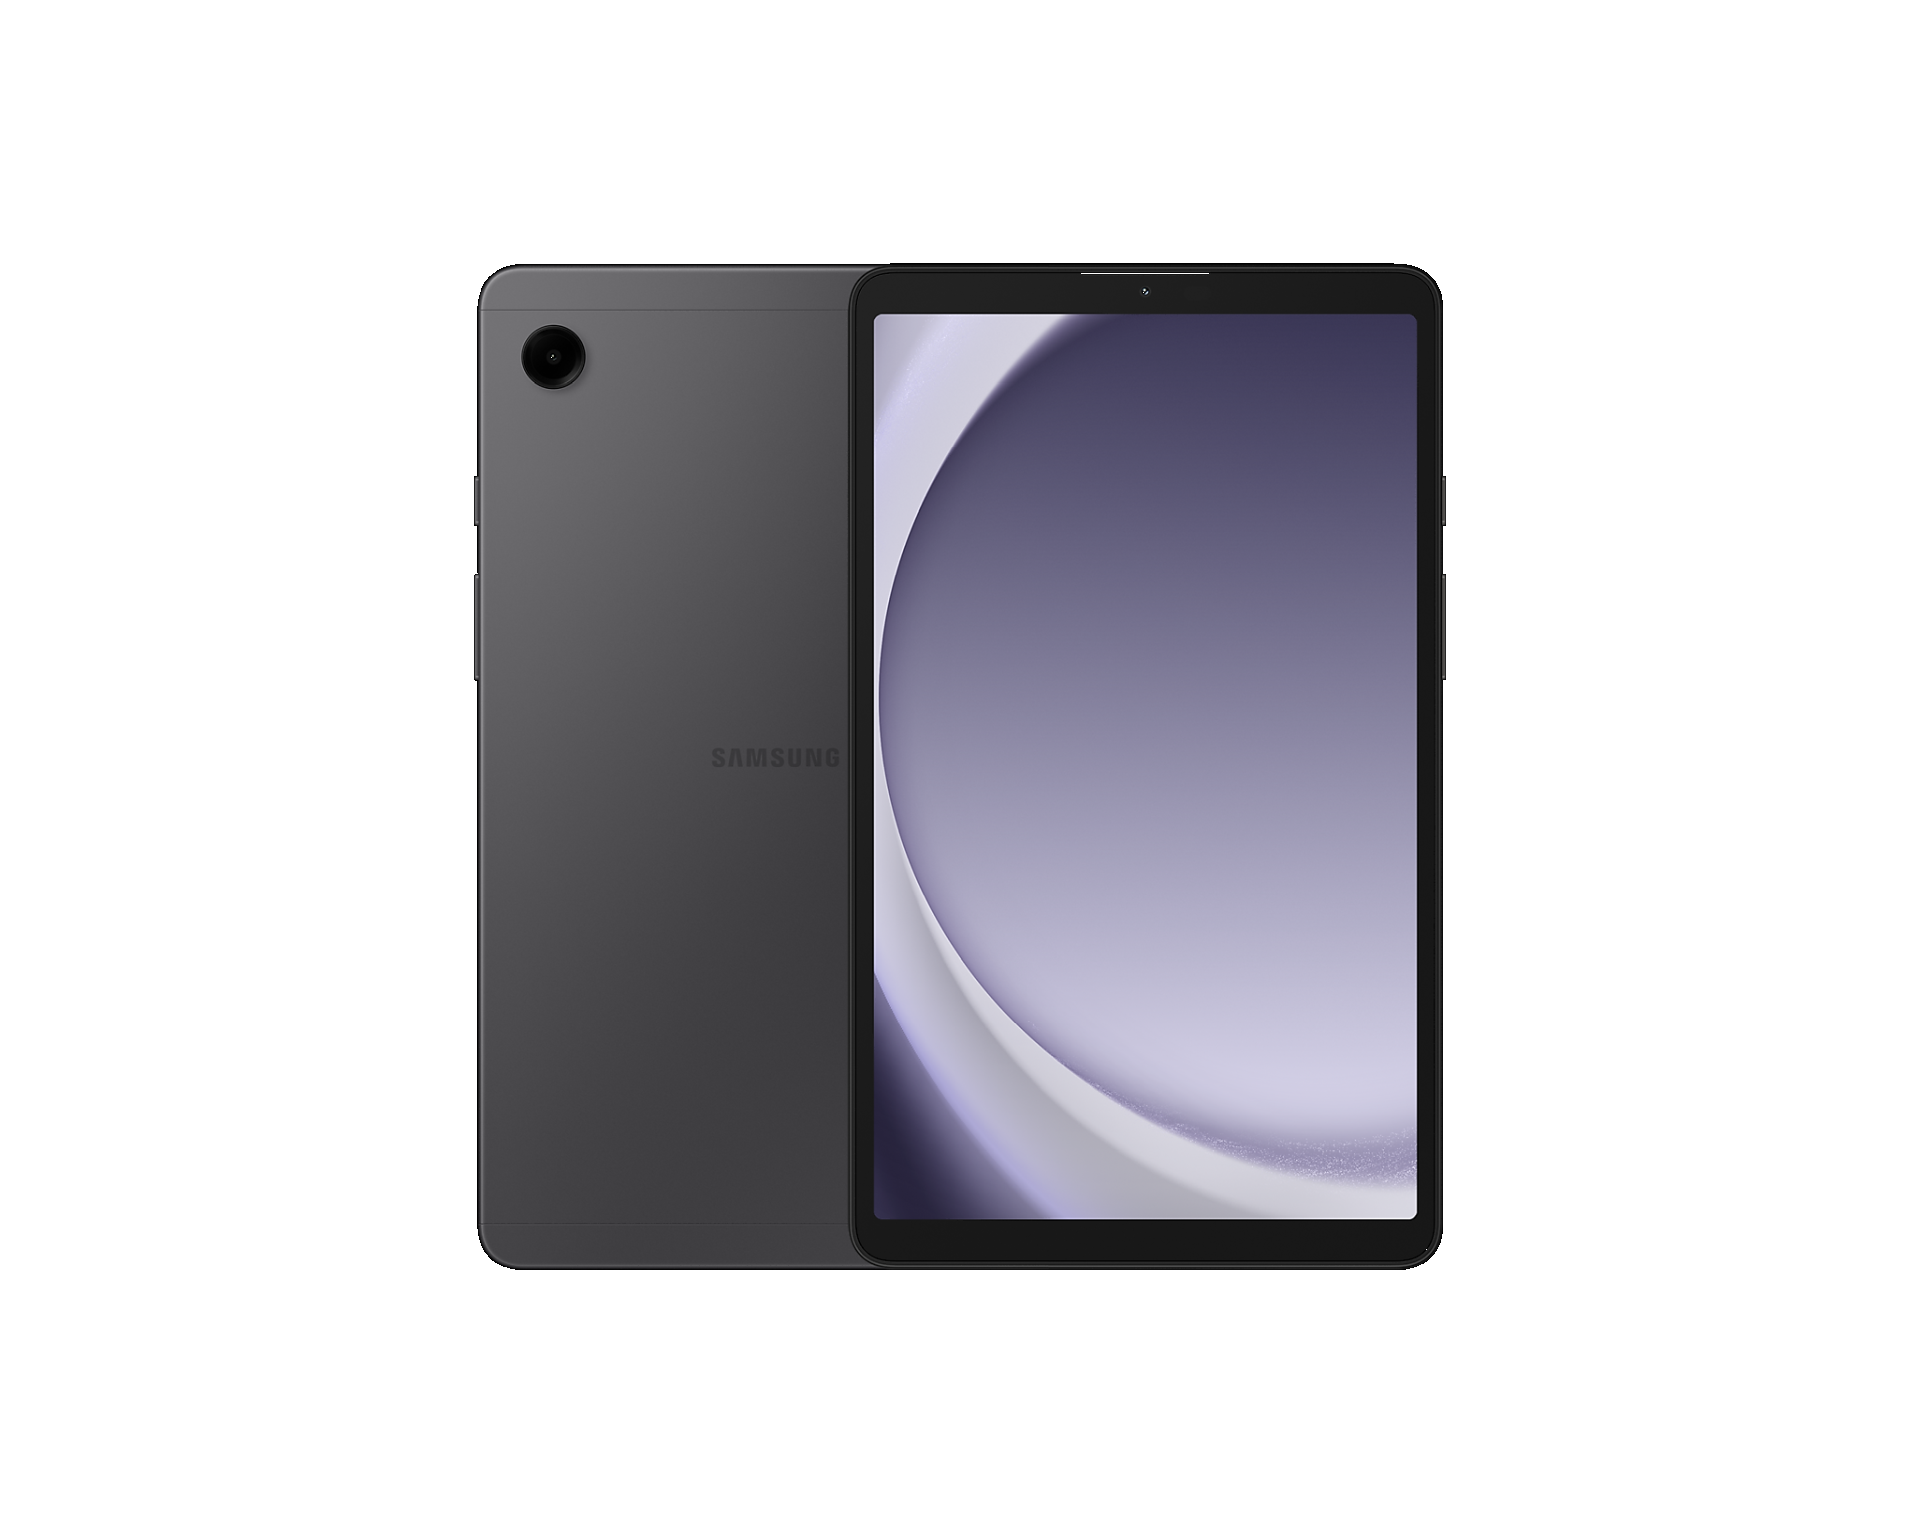 Galaxy Tab A9 WiFi 8.7 Tablet, Specs